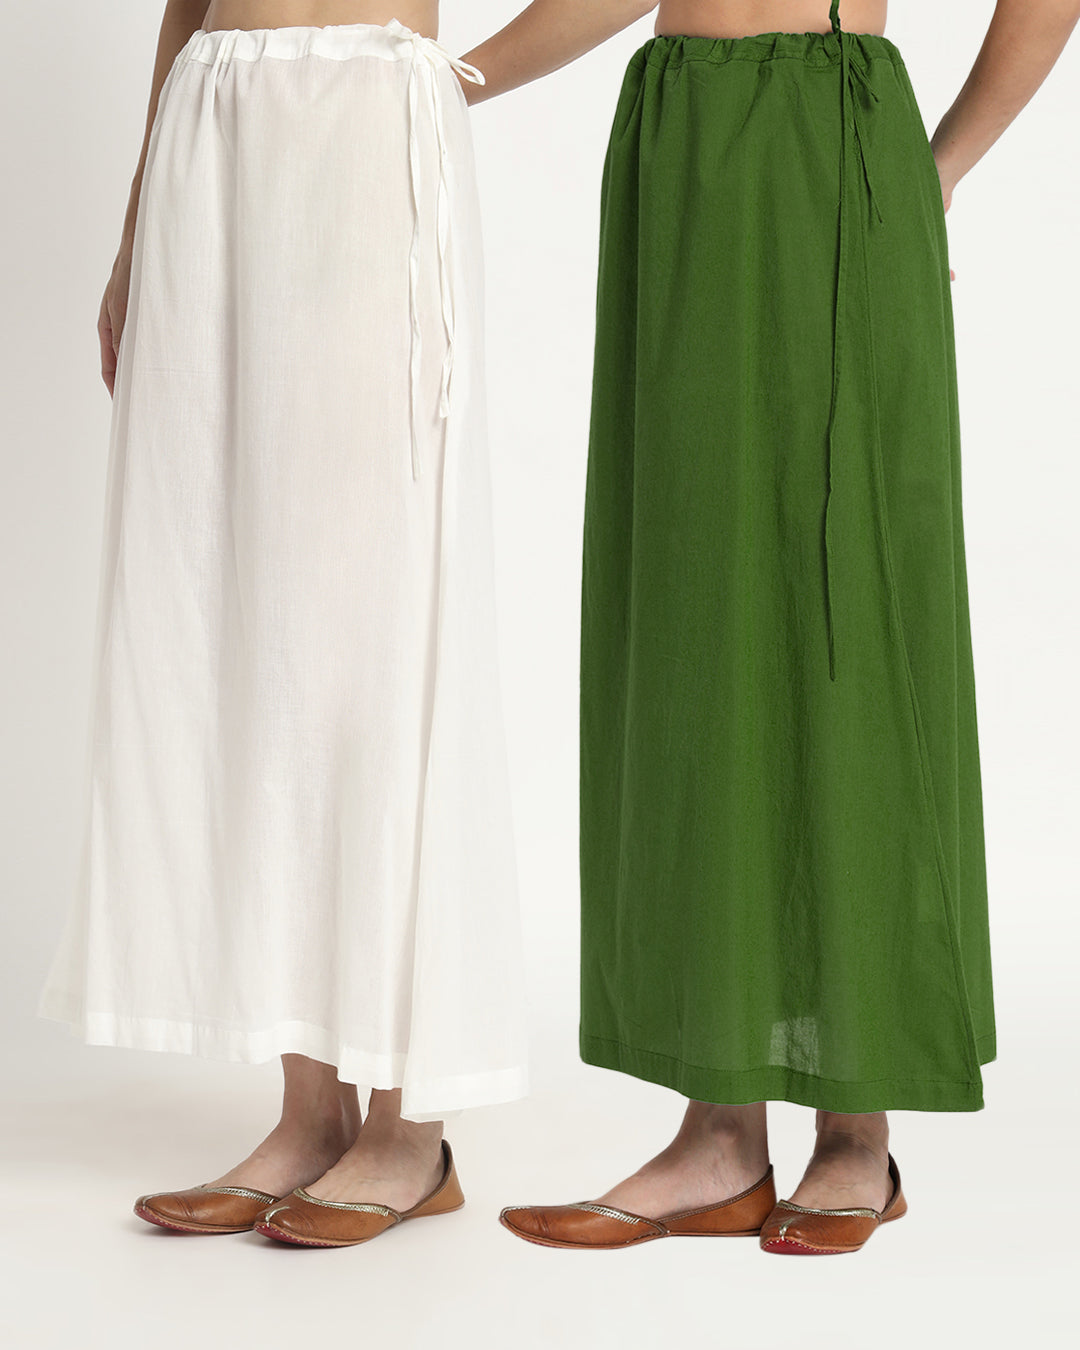 Combo: Pristine White & Greening Spring Peekaboo Petticoat- Set of 2